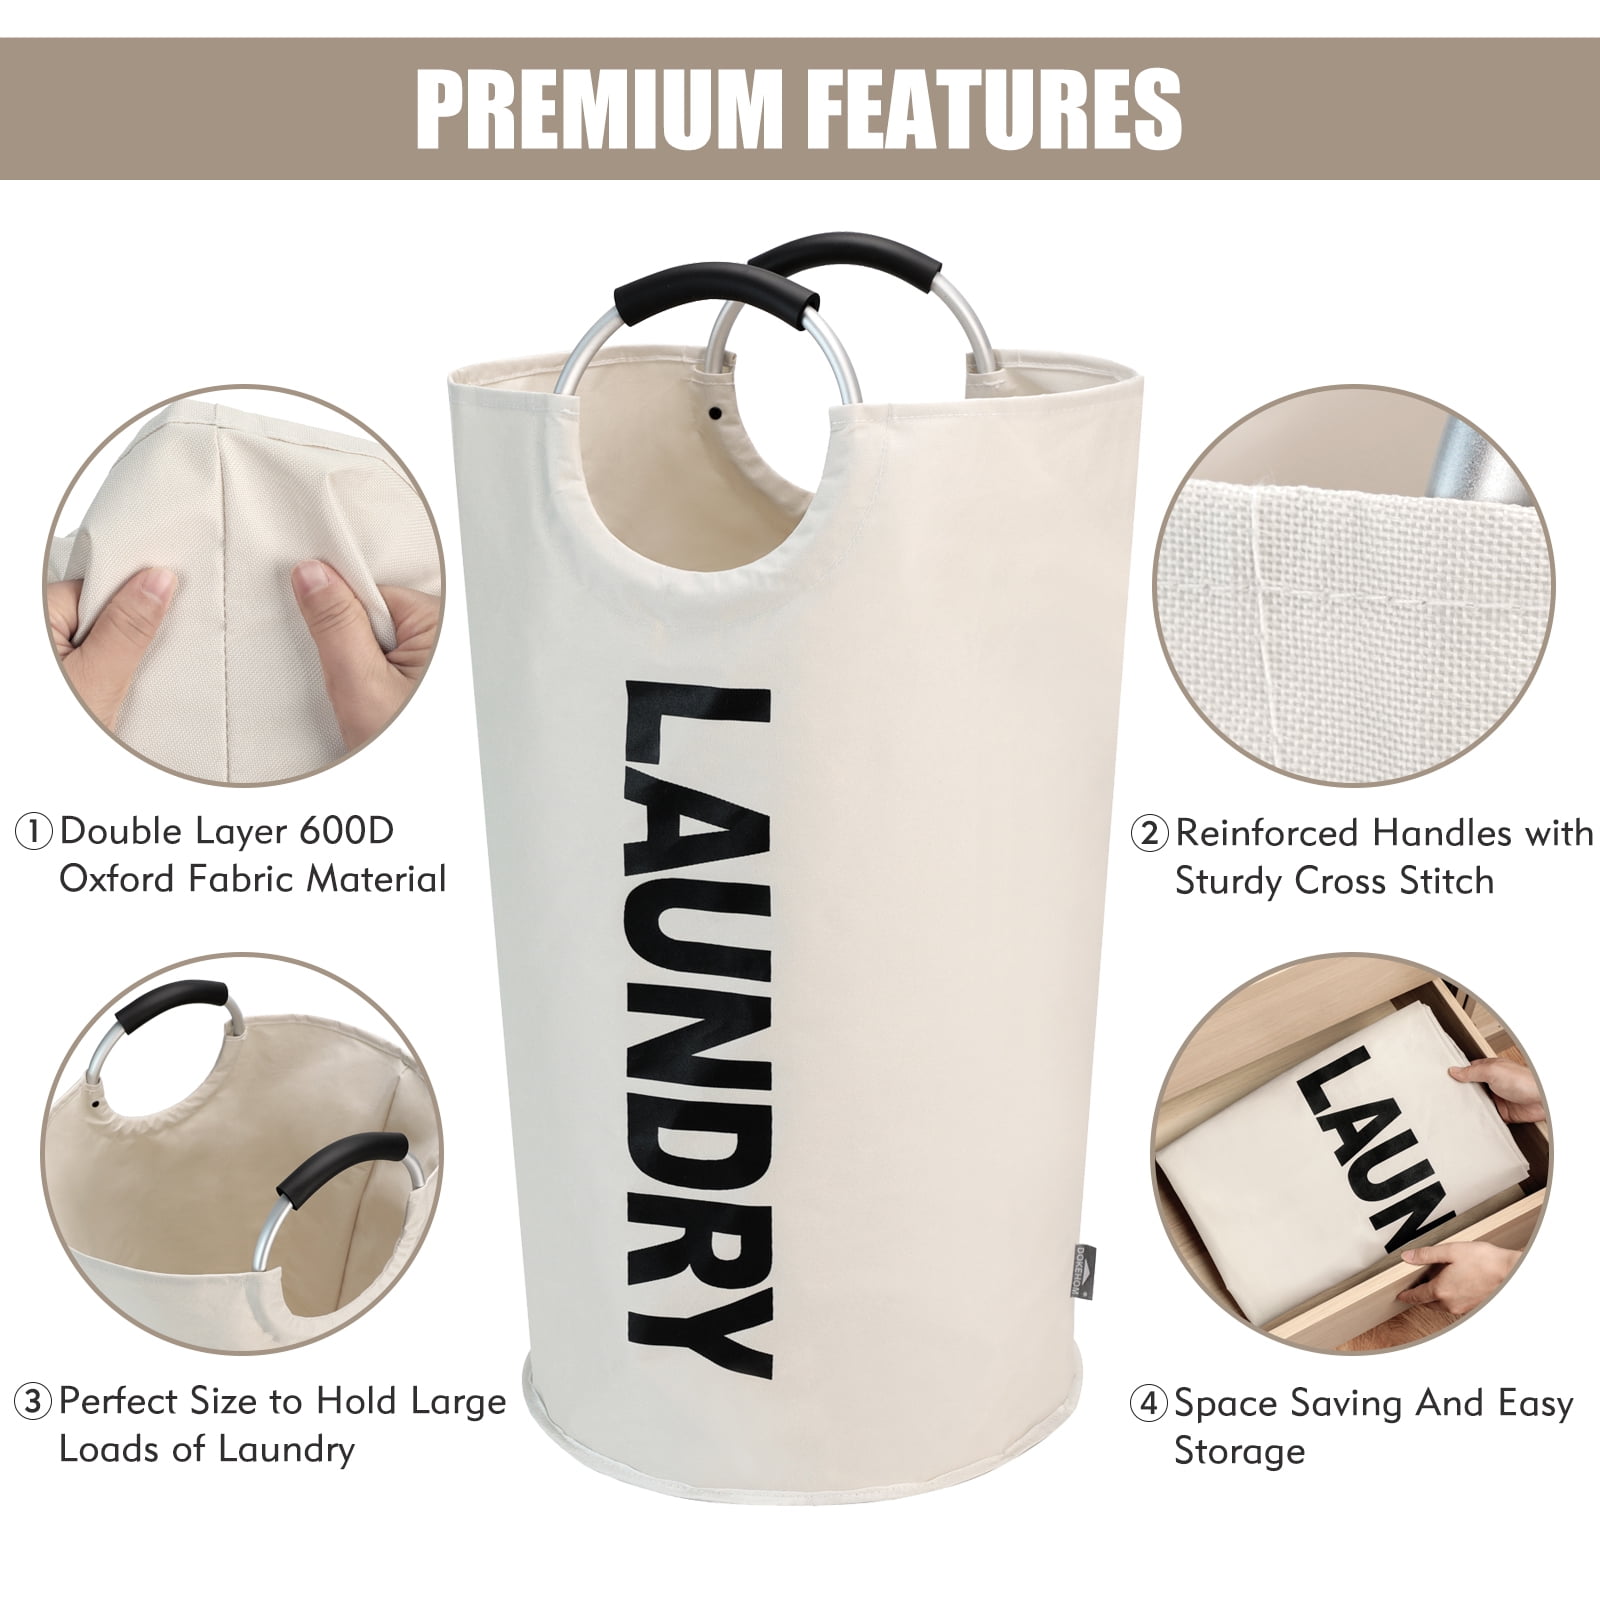 Top Quality 100% Waterproof Foldable Laundry Basket – LB003 - Cotton Nest